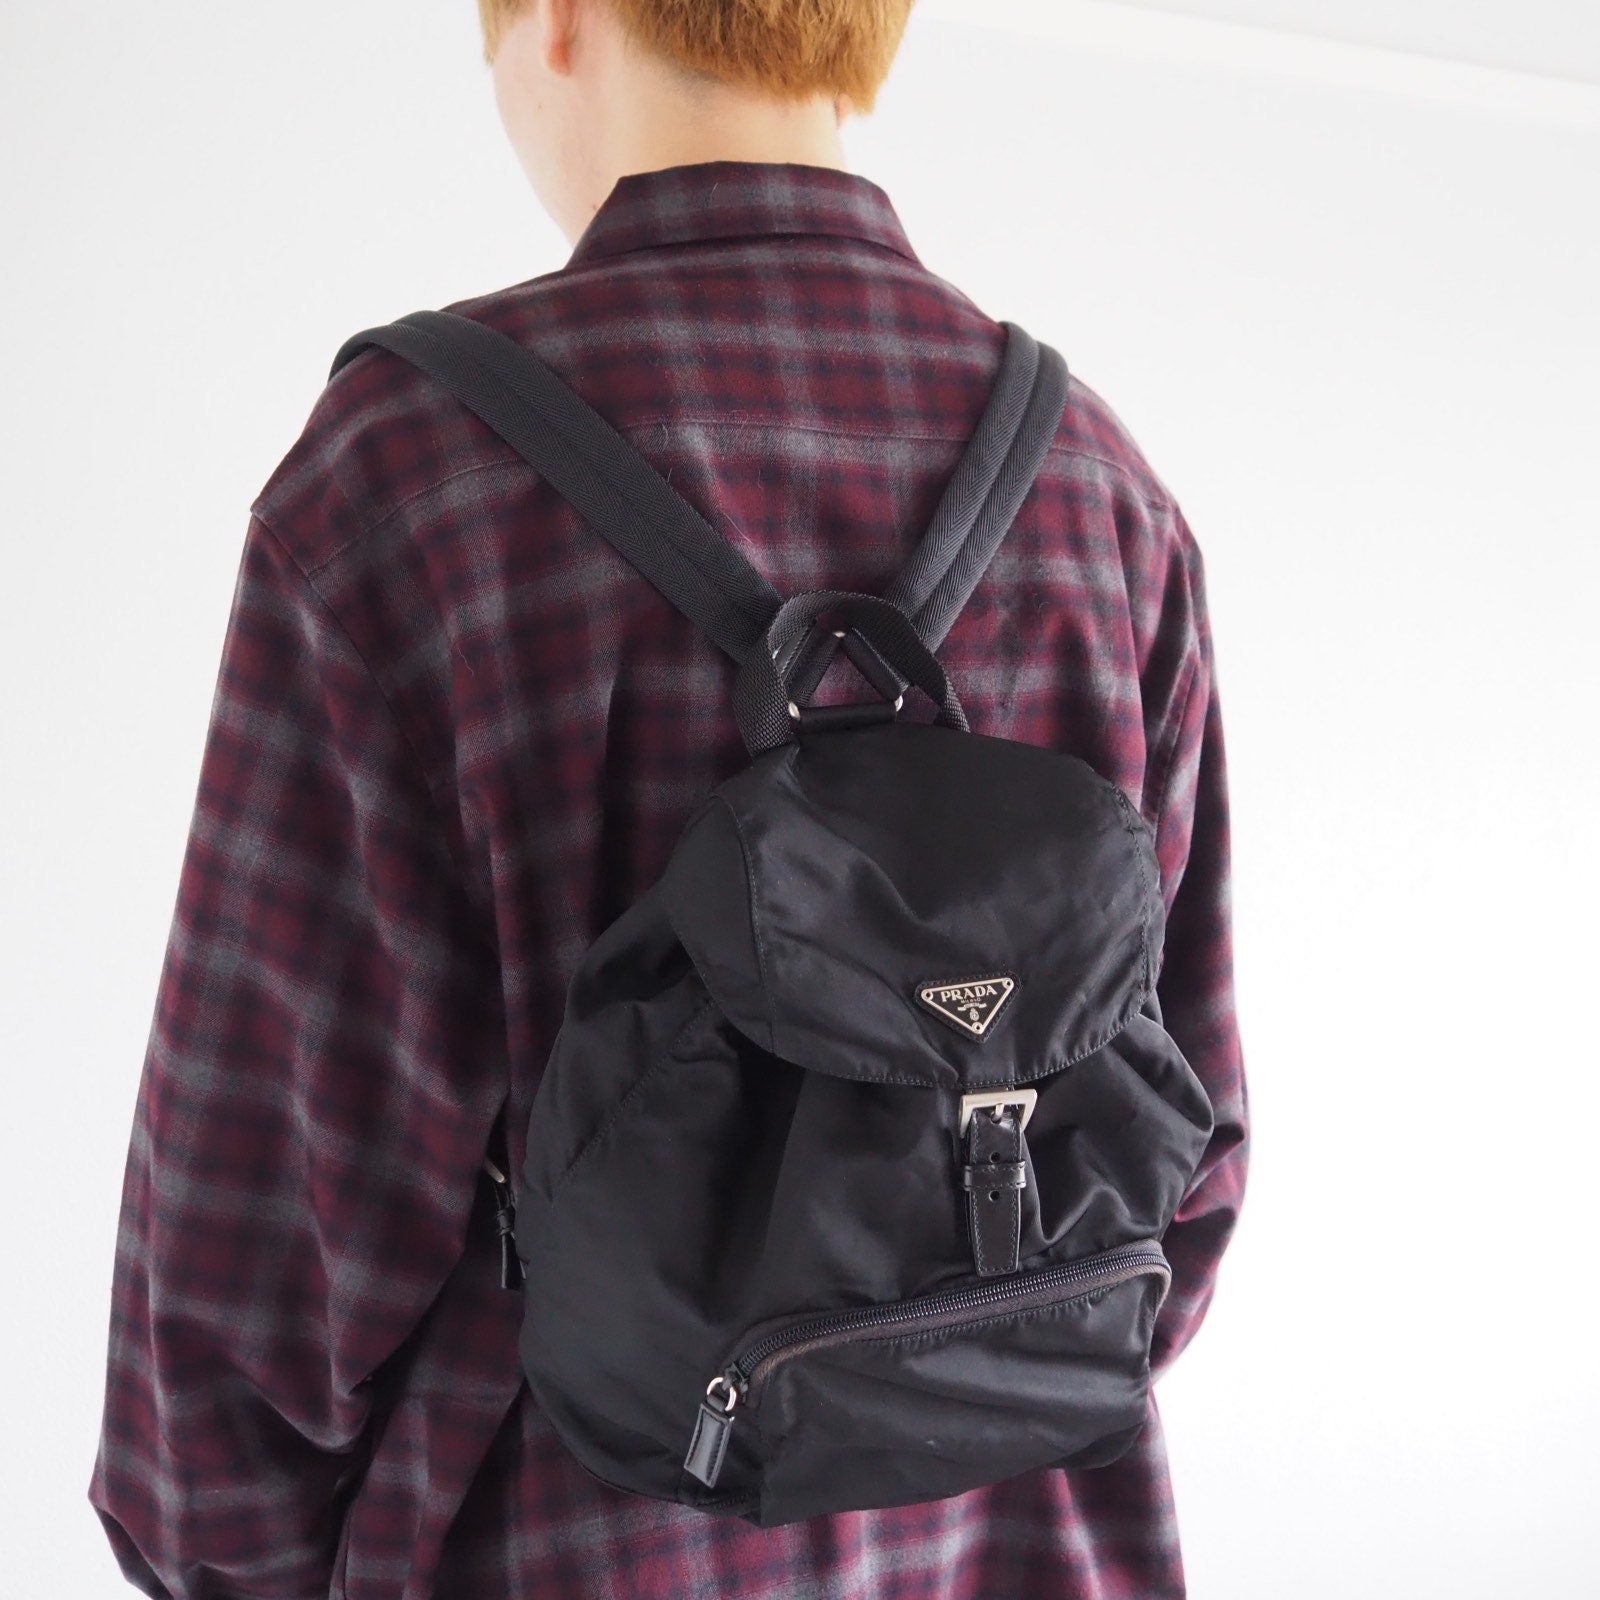 9PRADA Nylon Leather Backpack Bag Black Logo Purse Authentic